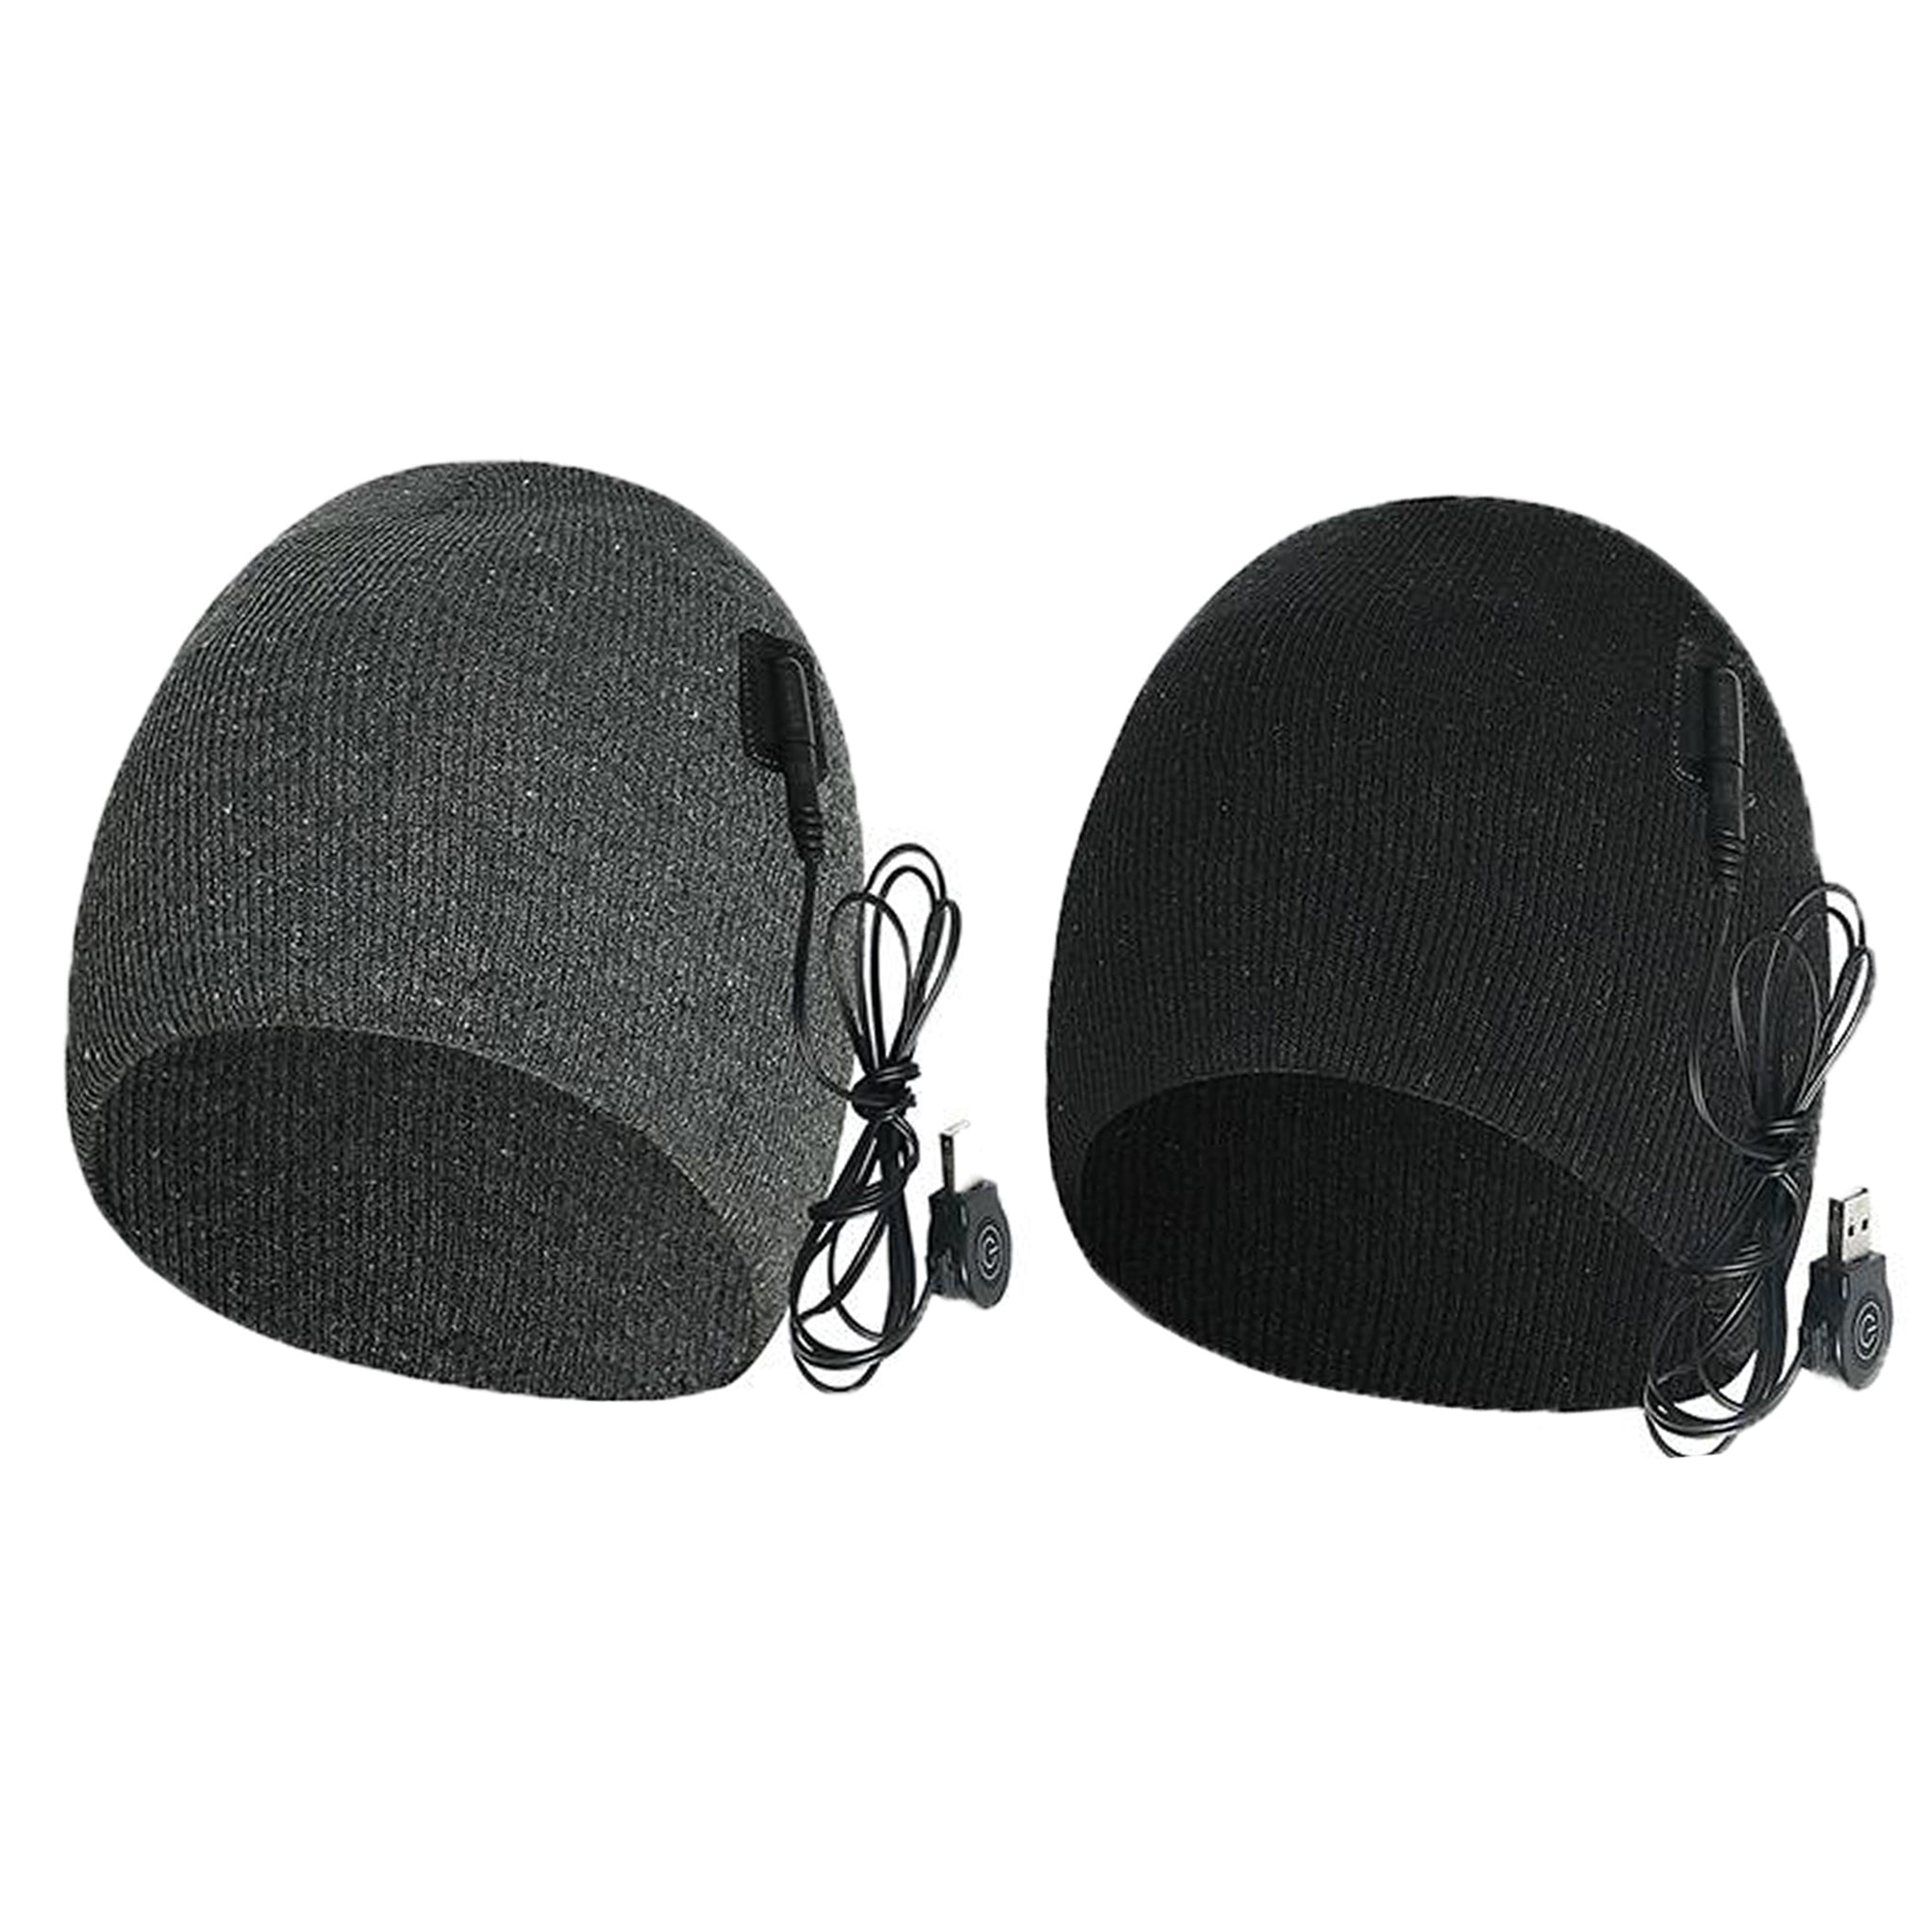 Crape - Heated Hat | Outdoor Ski Hat | Warm Heating Hat | Winter Knitted Hat